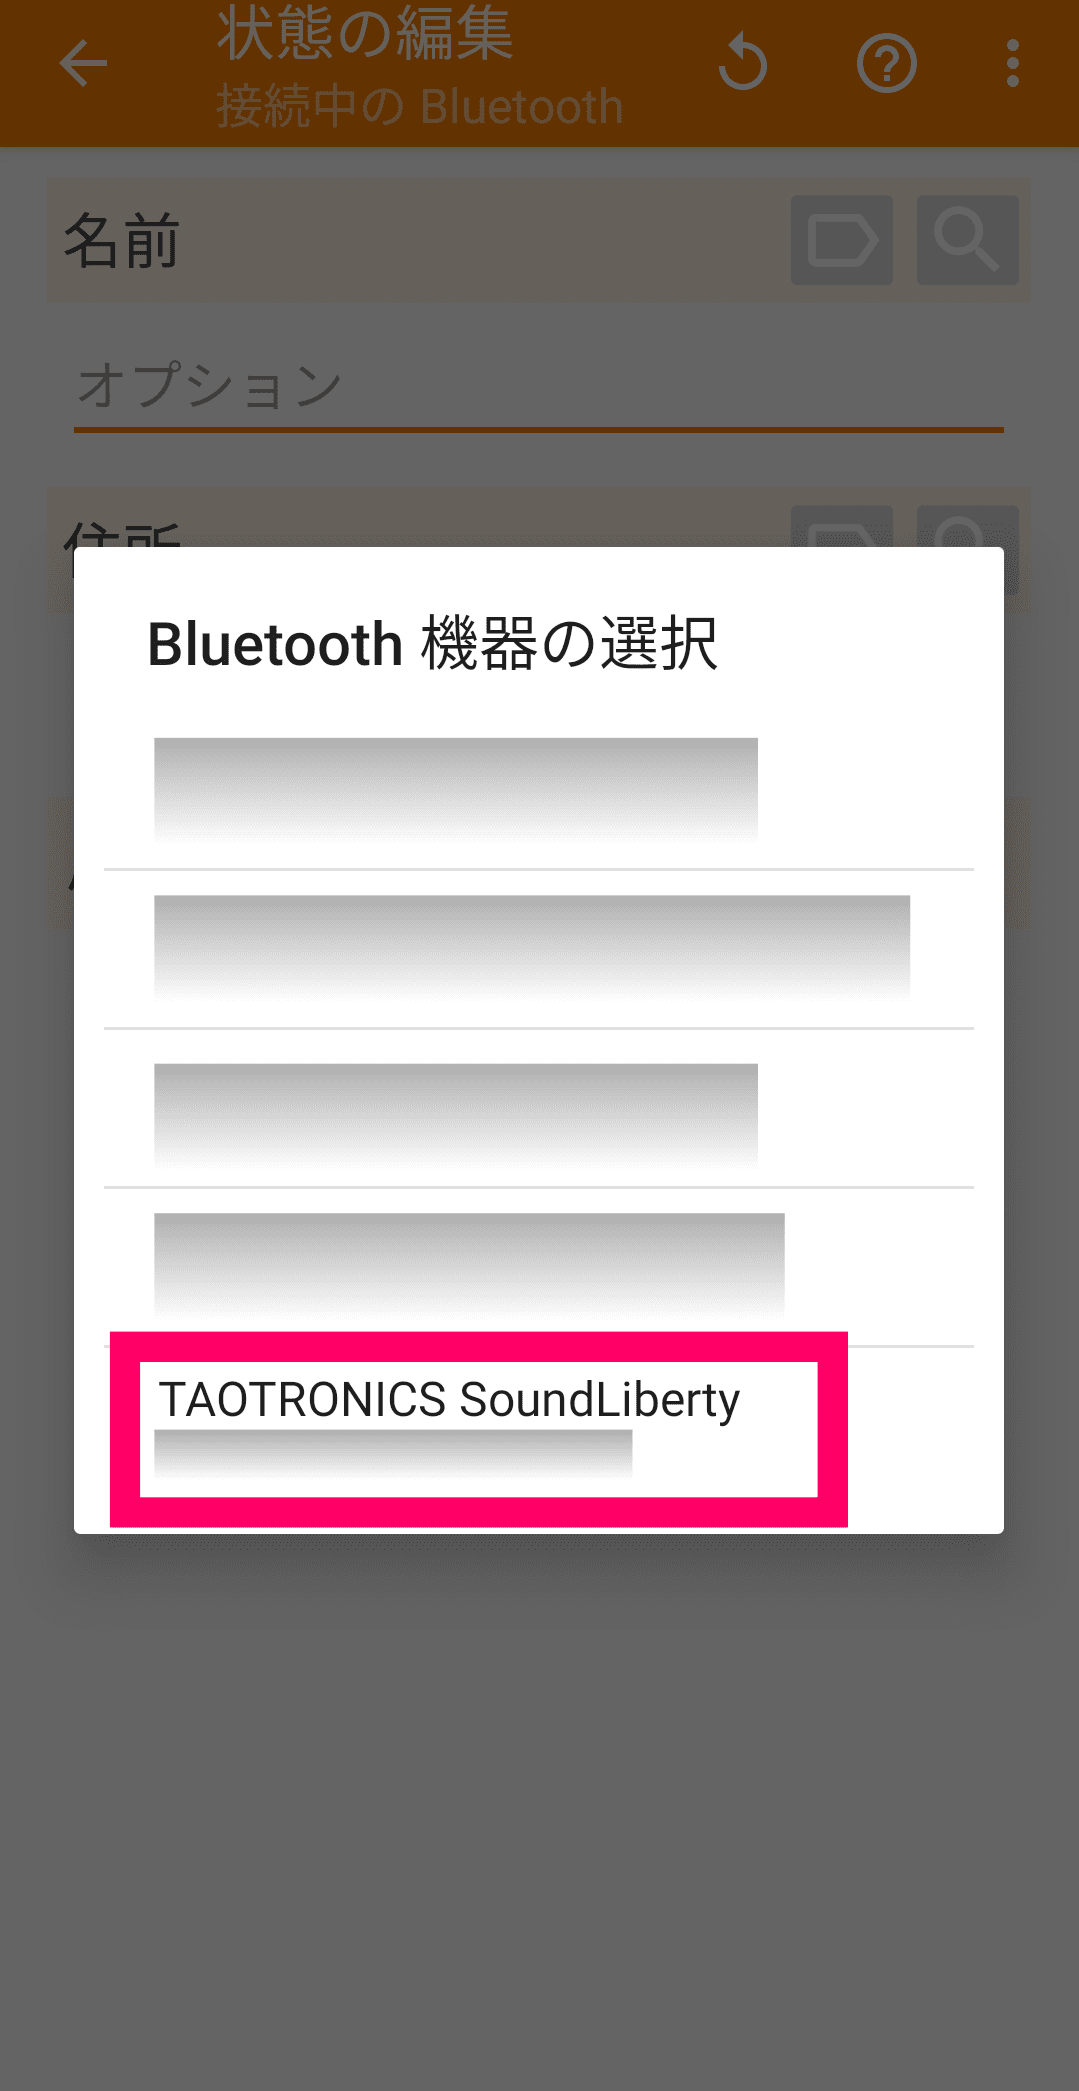 Bluethoothイヤホンに接続したらTaskerアプリで音楽を自動再生させる設定方法